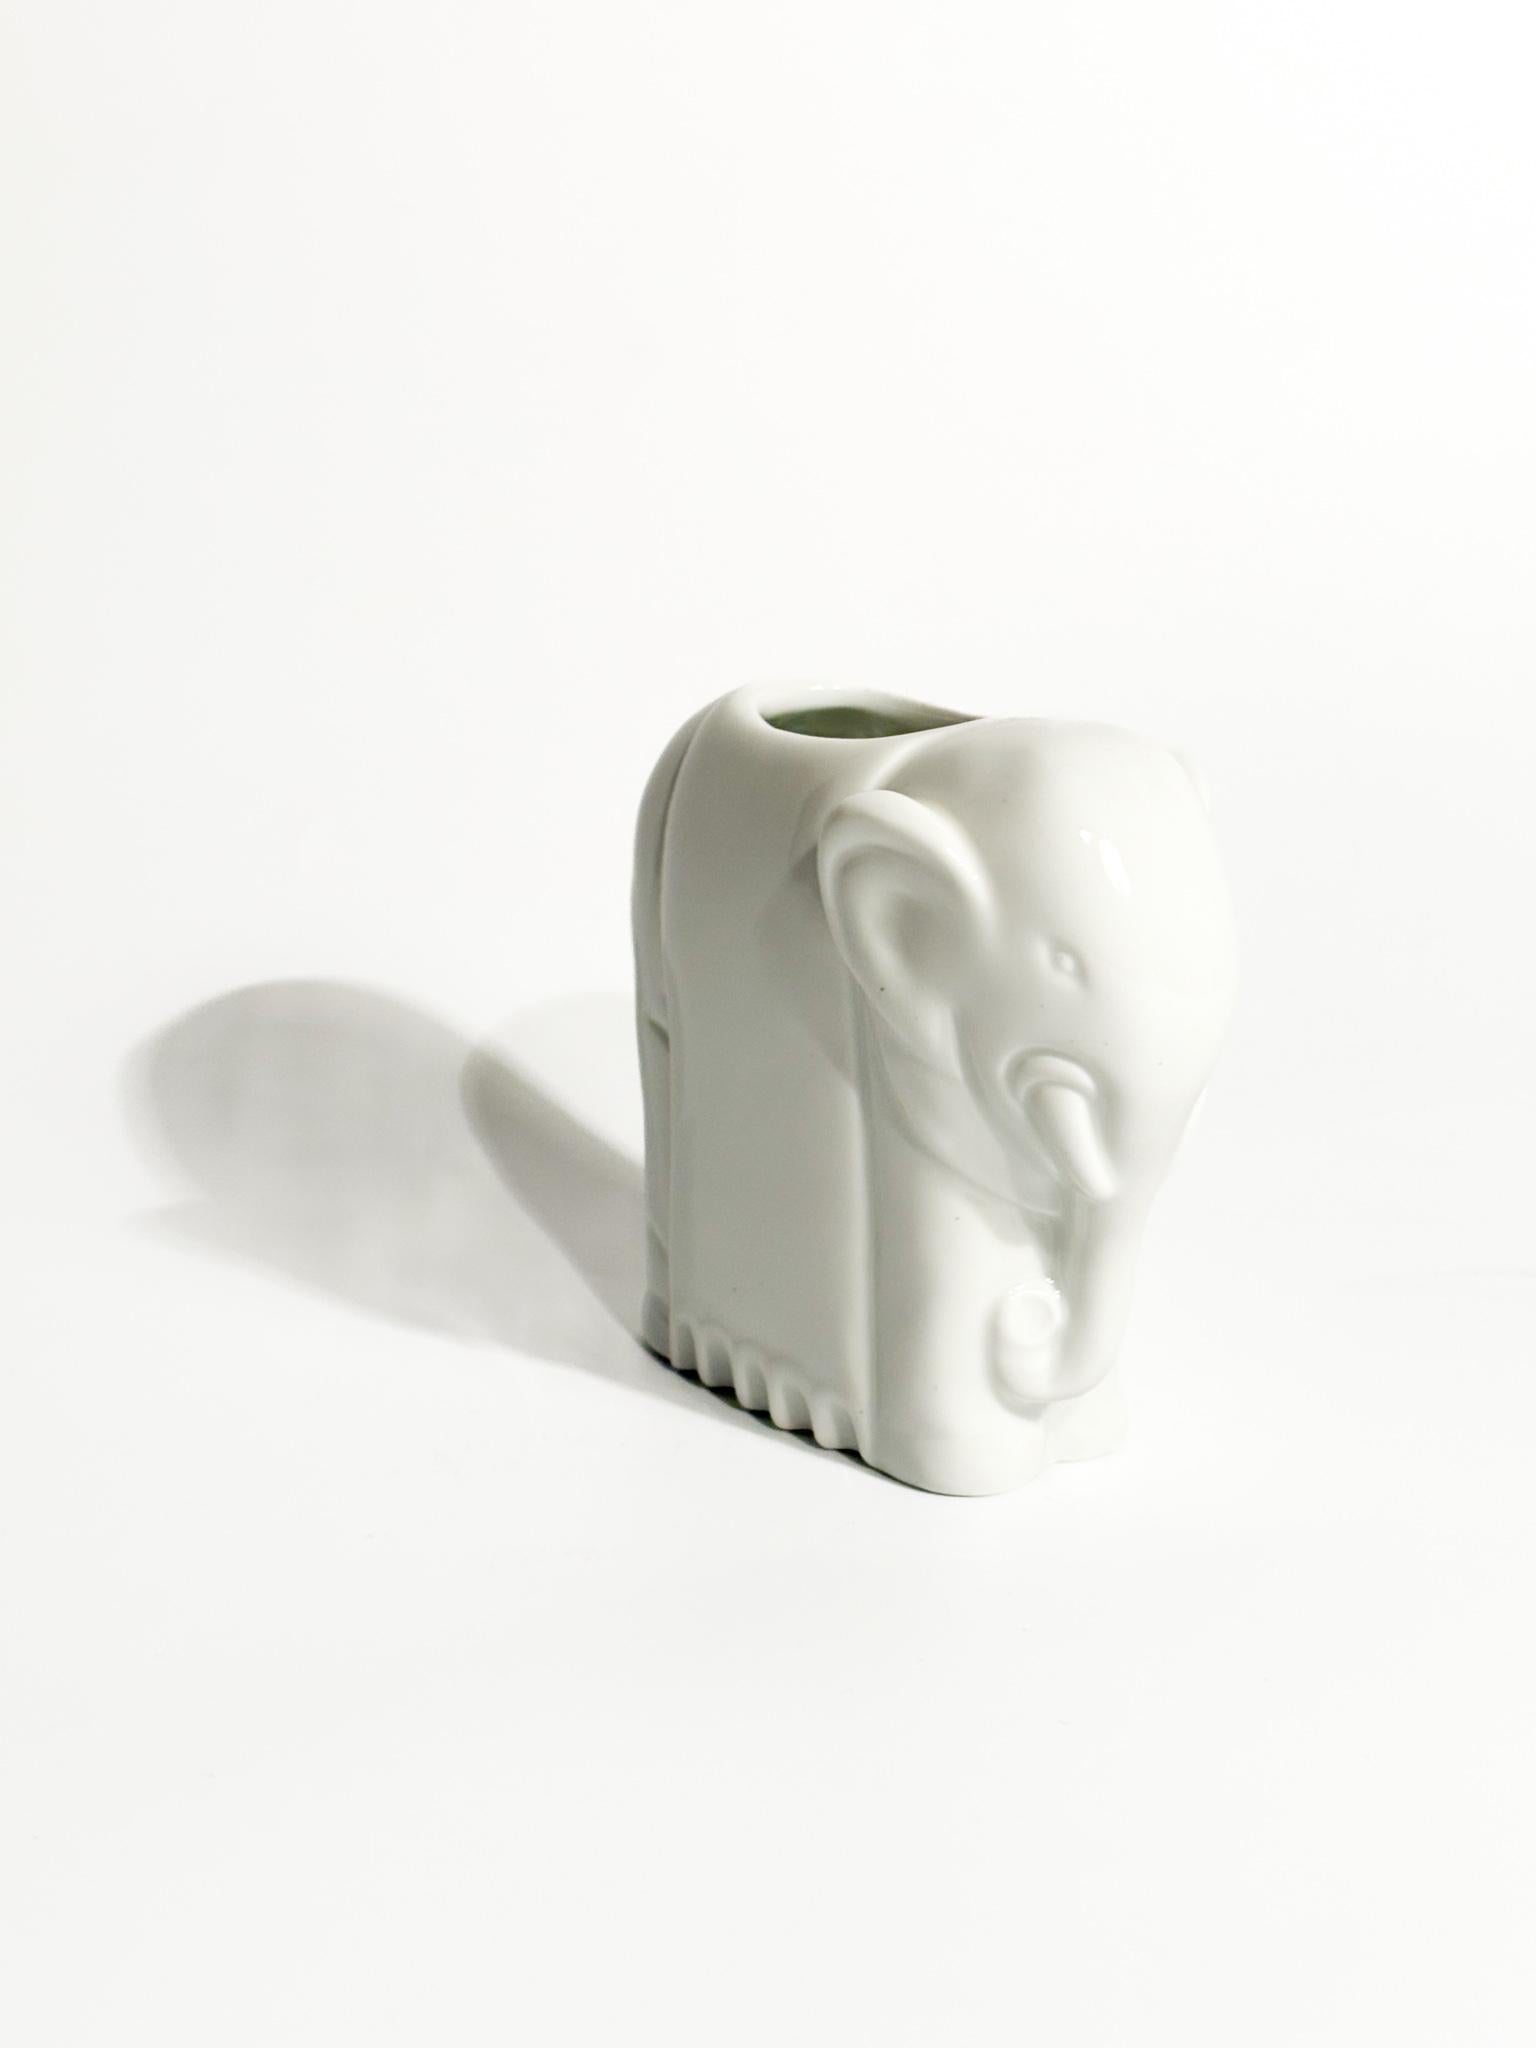 Italian White Elephant Vase Re-edition by Gio Ponti for Richard Ginori 1980s For Sale